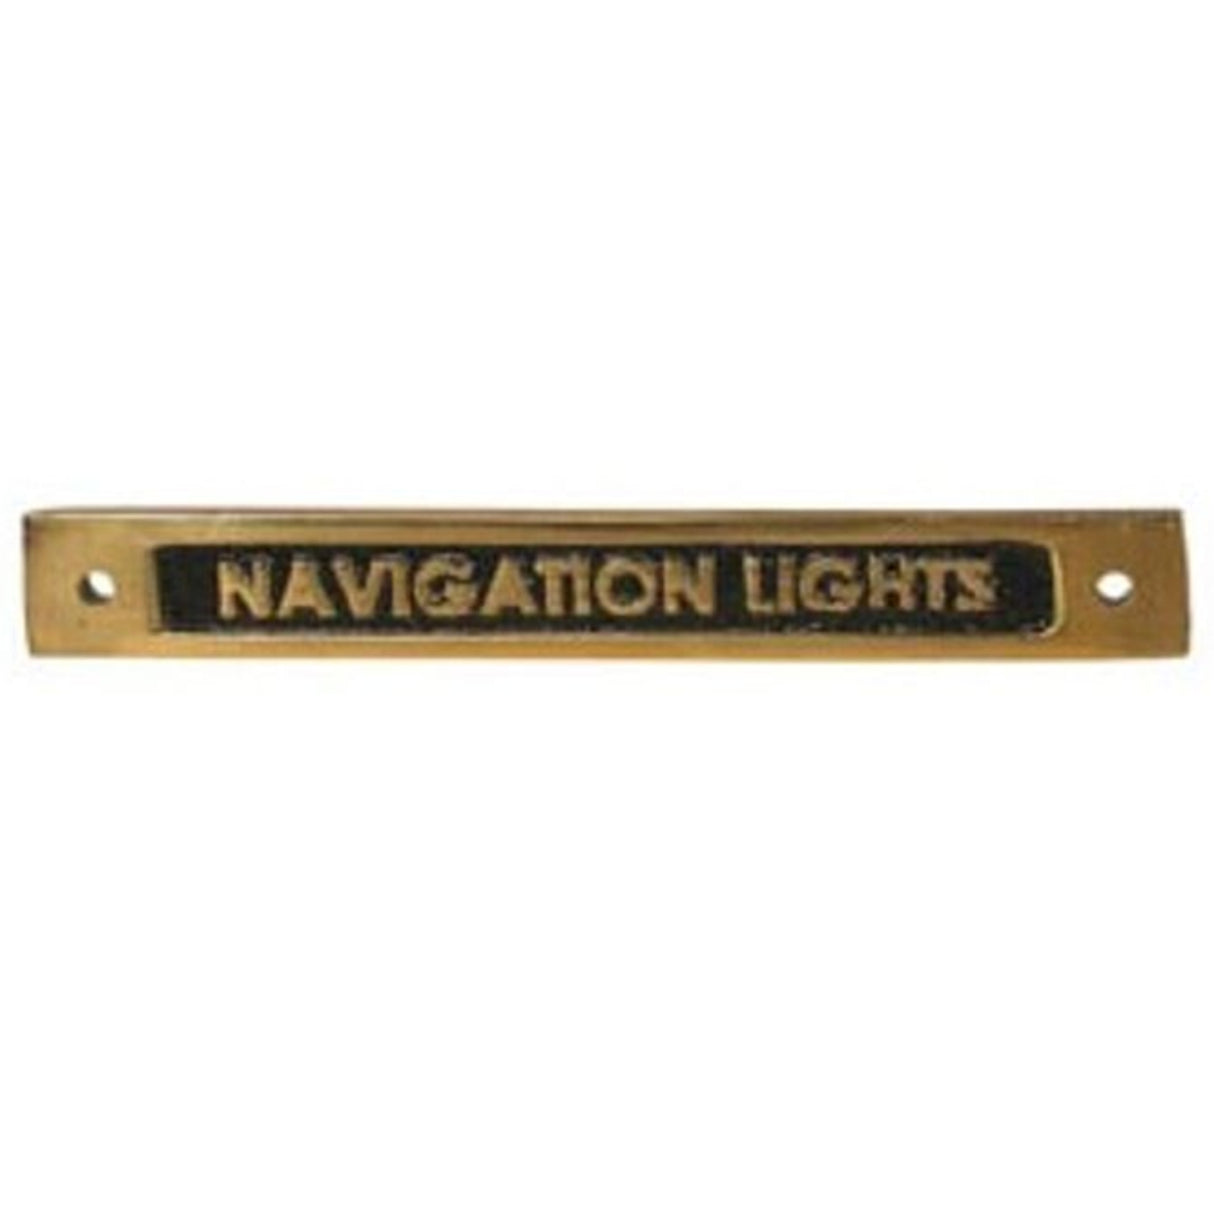 AG Navigation Lights - Oblong Name Plate Brass - PROTEUS MARINE STORE